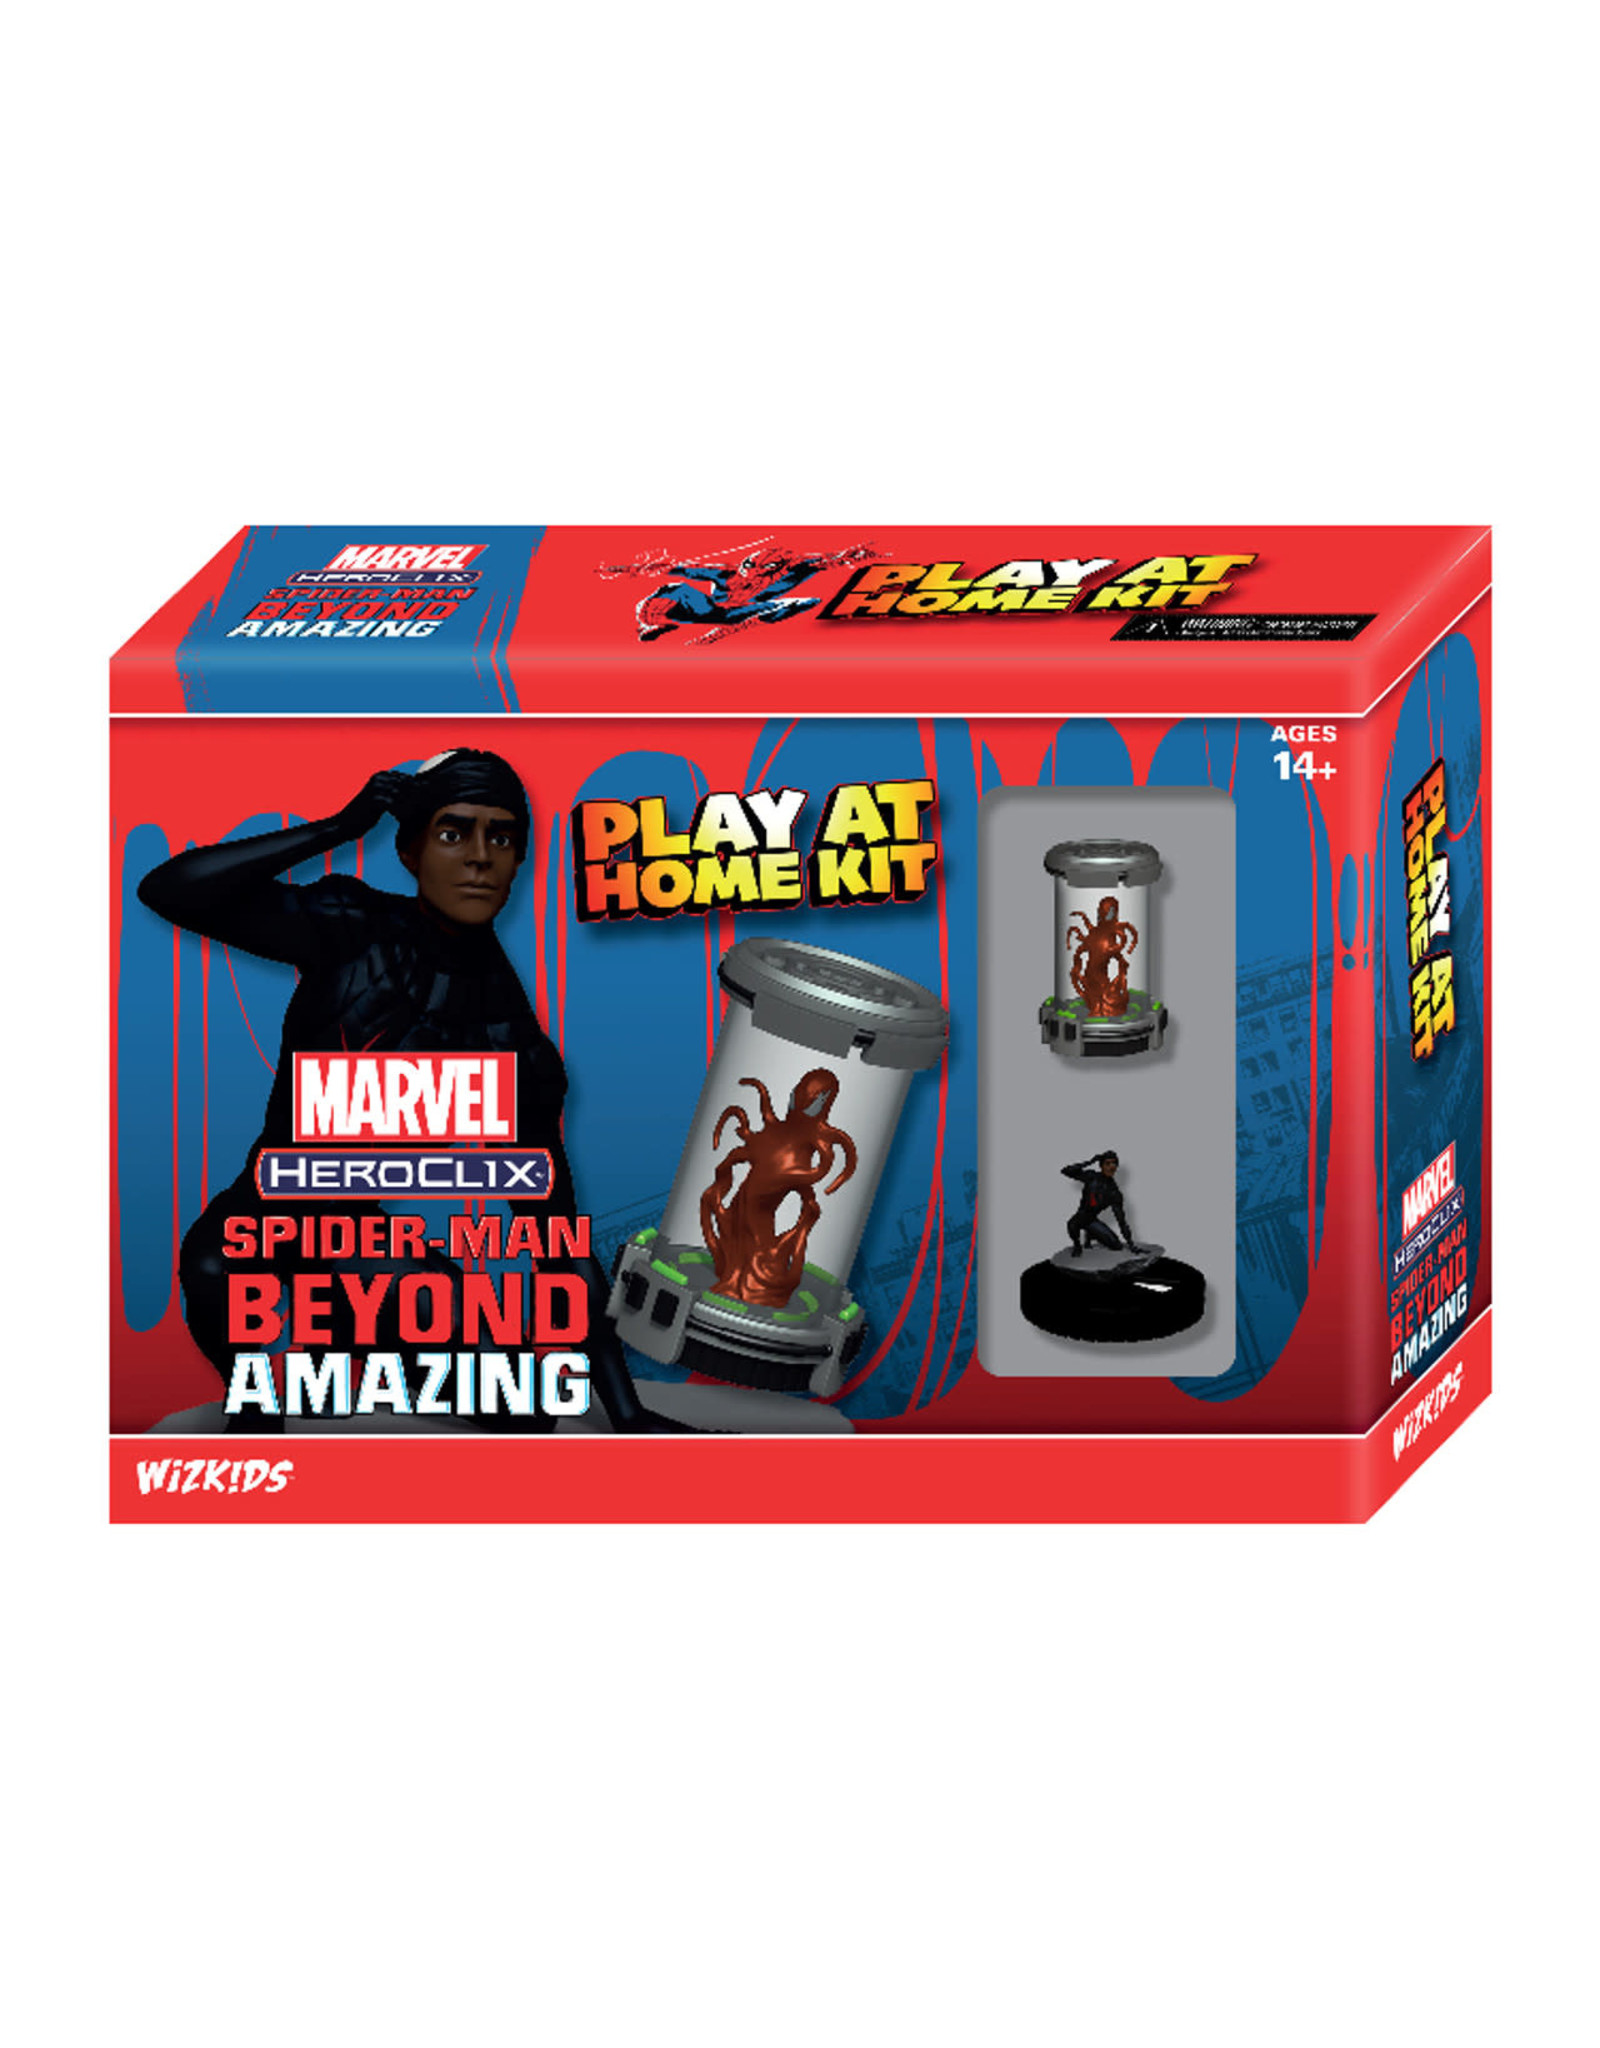 Wizkids Marvel HeroClix: Spider-Man Beyond Amazing Play at Home Kit - Miles Morales